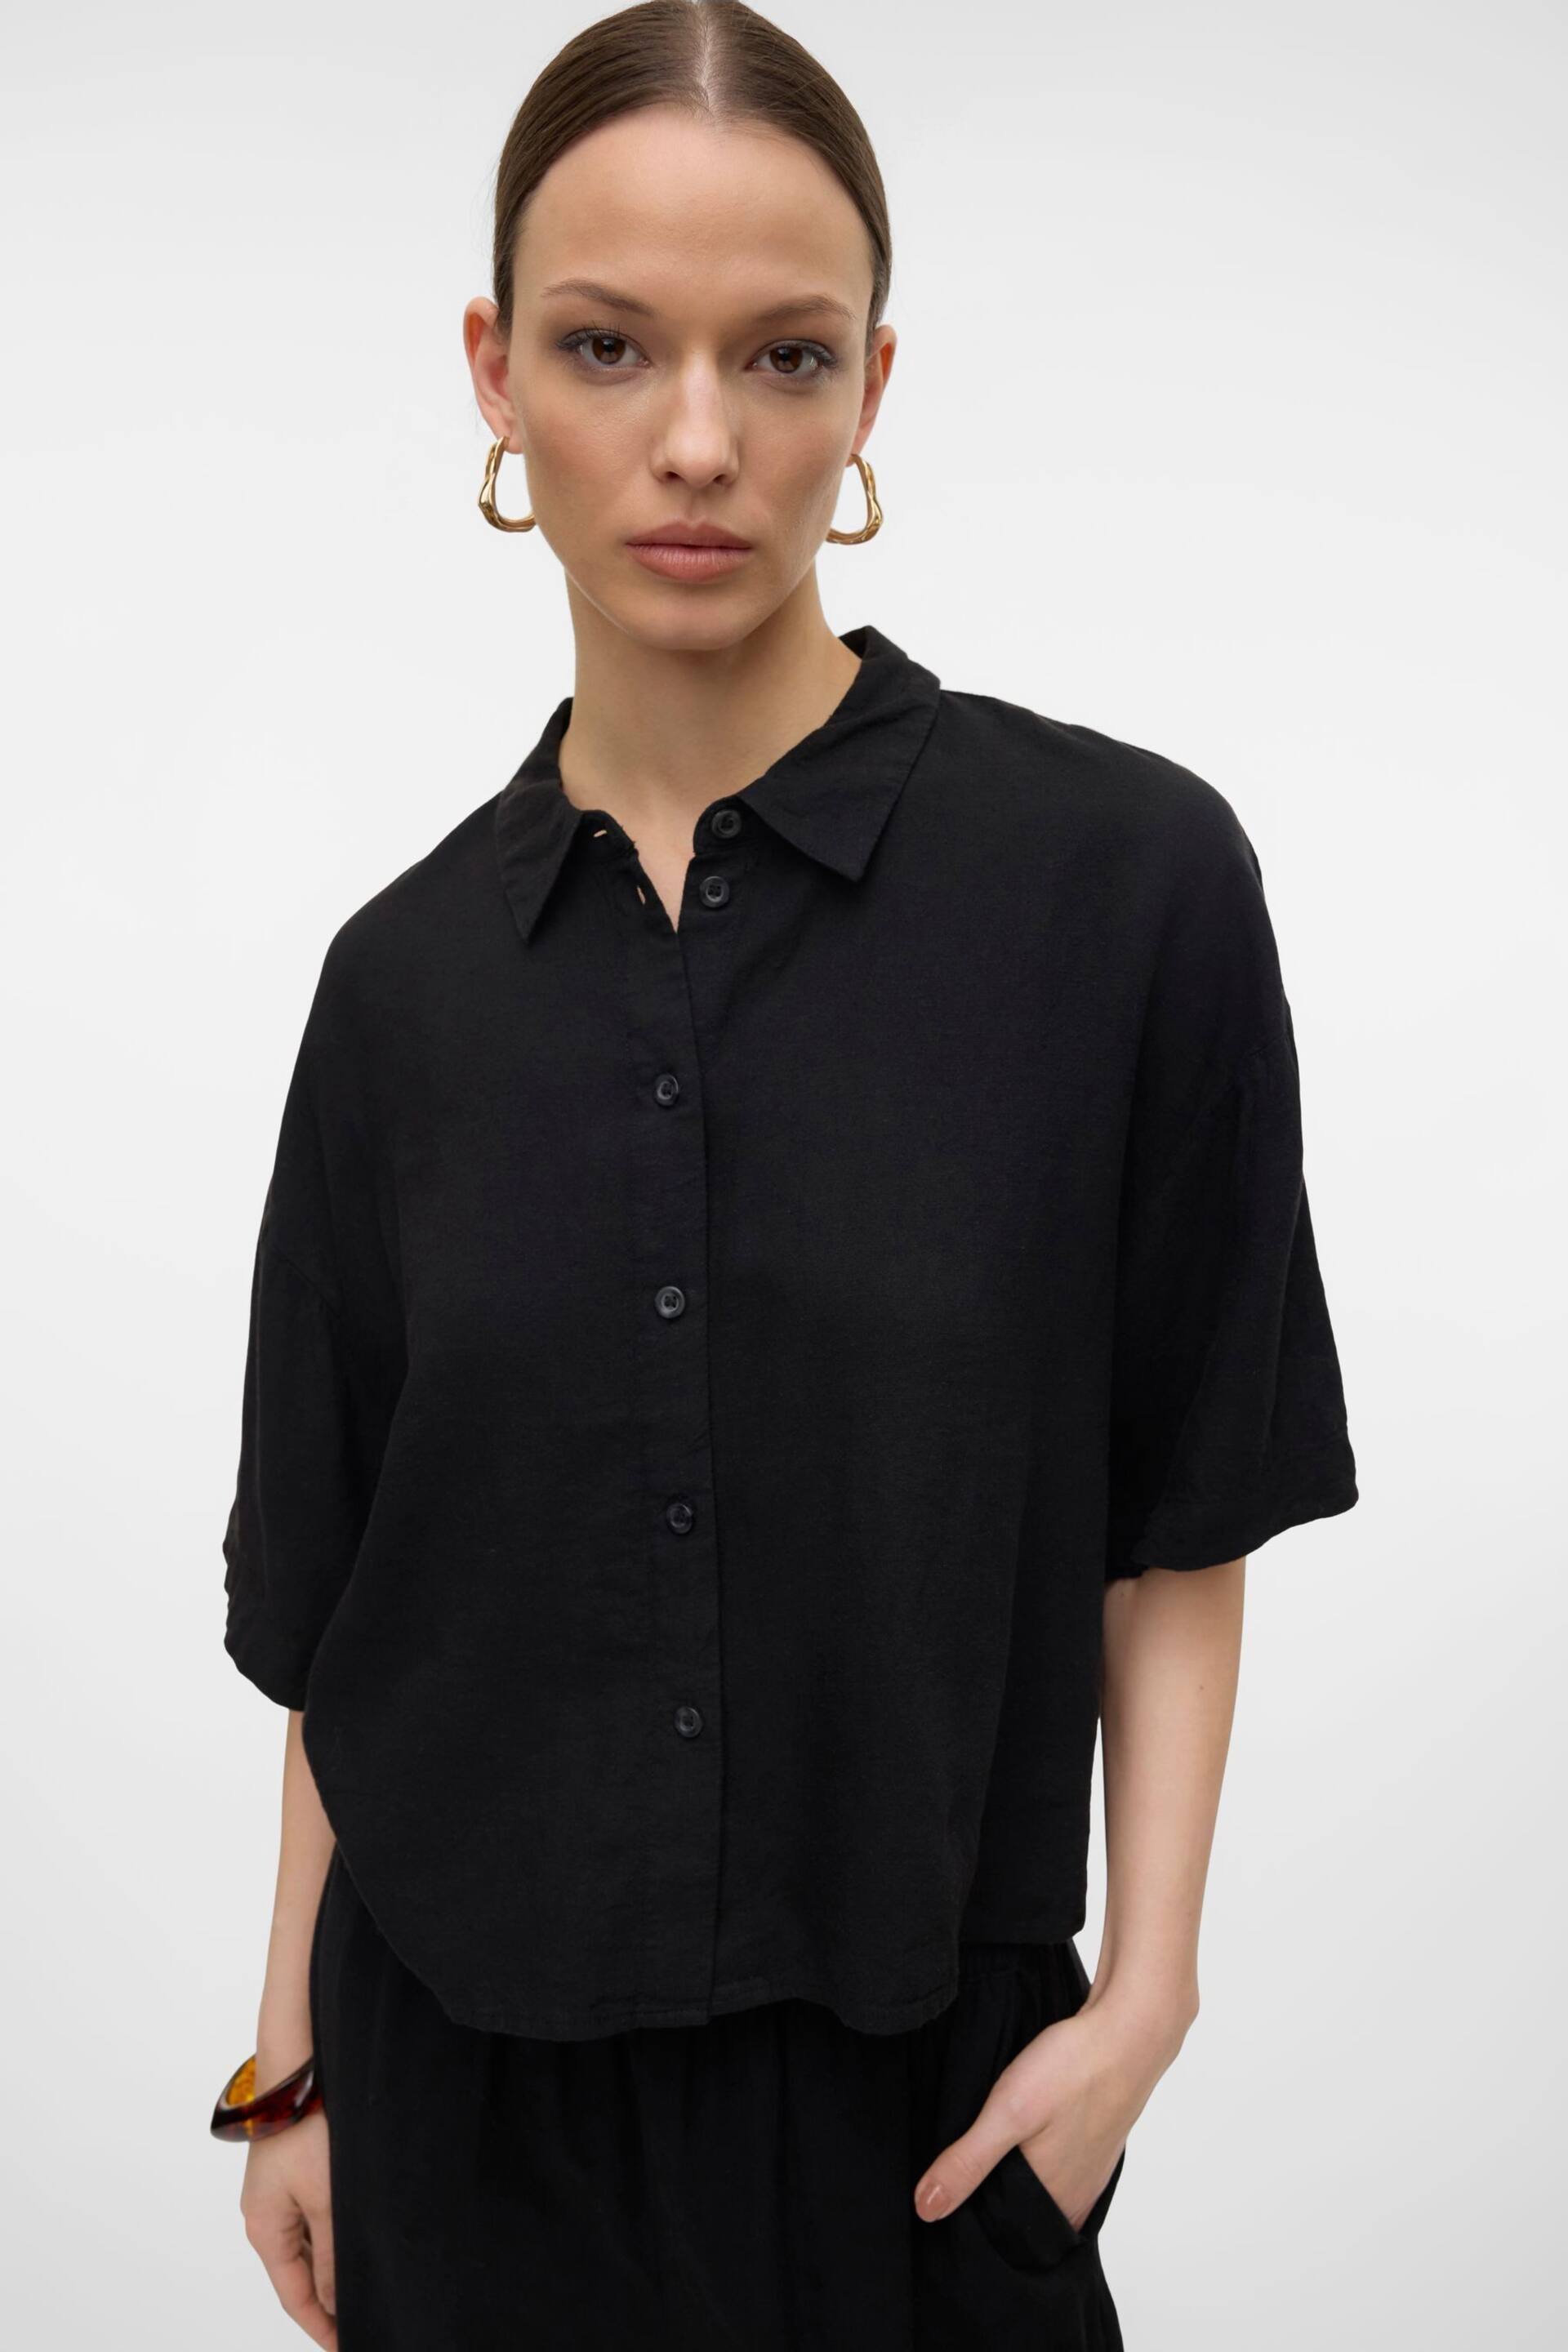 VERO MODA Black Linen Blend Short Sleeve Relaxed Shirt - Image 3 of 6